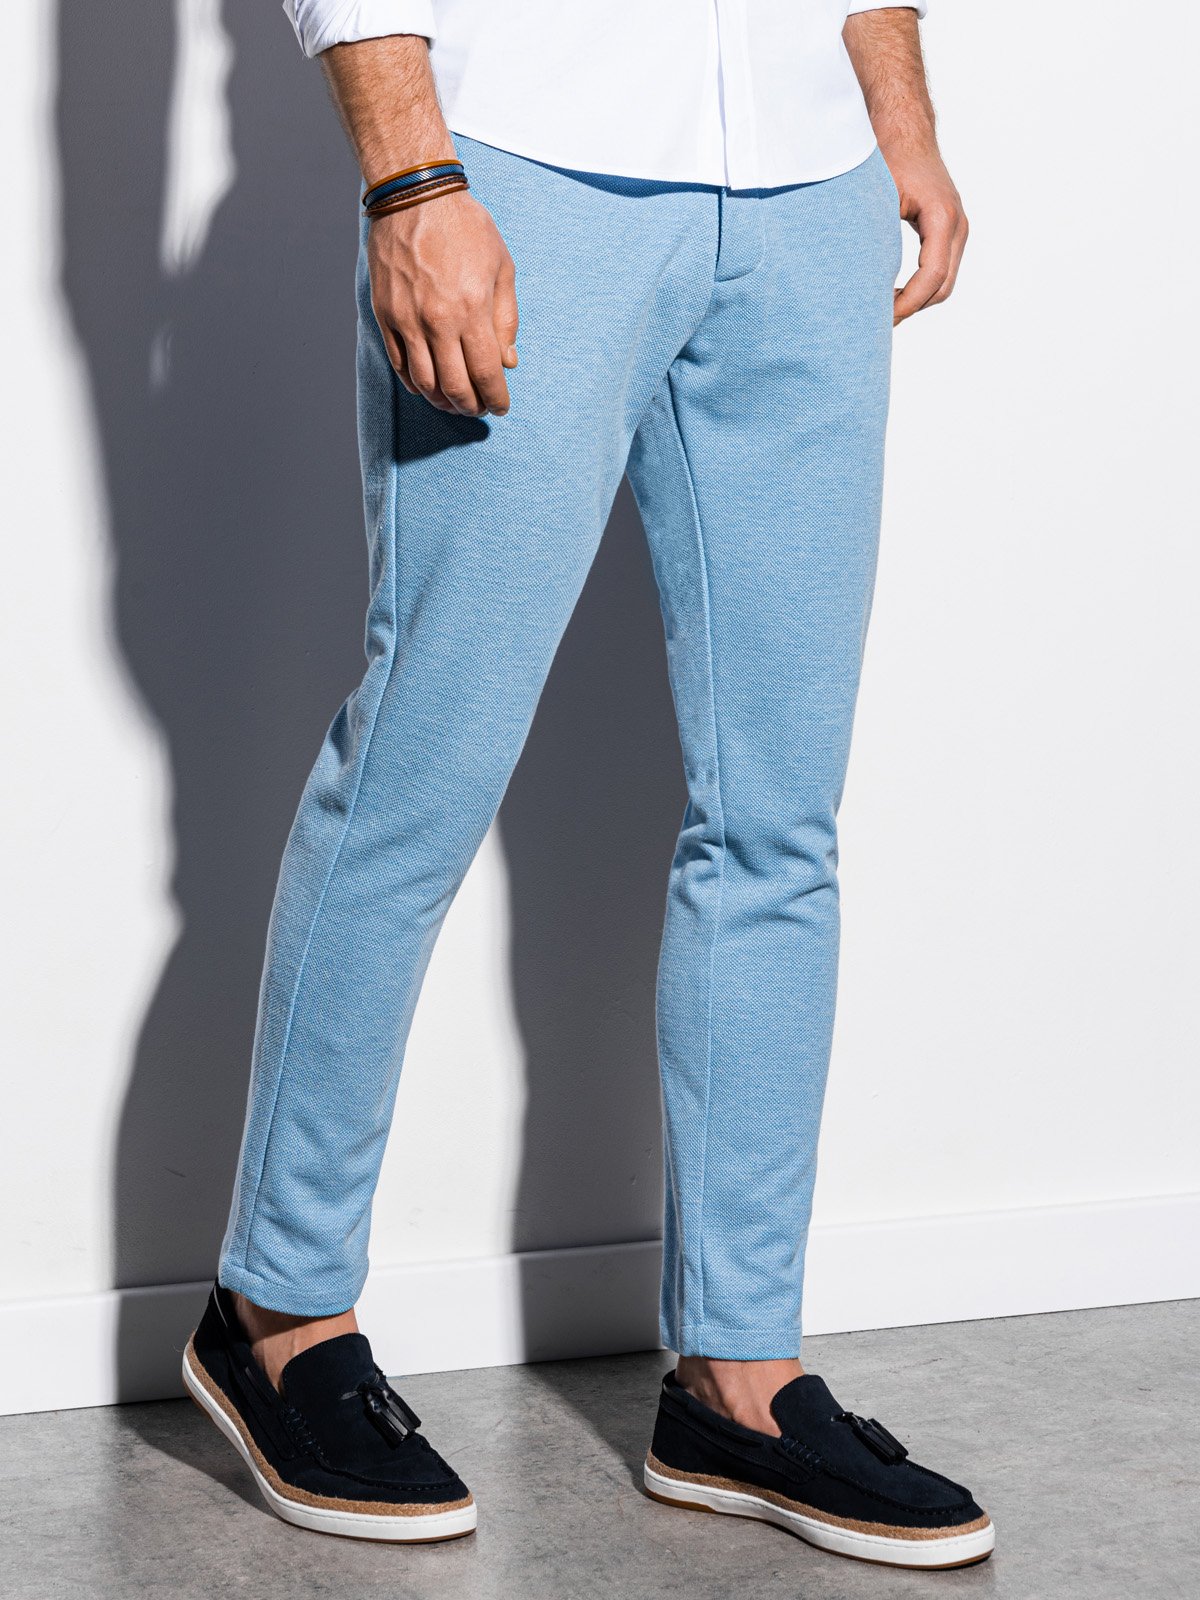 Men's pants chinos P891 - light blue | MODONE wholesale - Clothing For Men